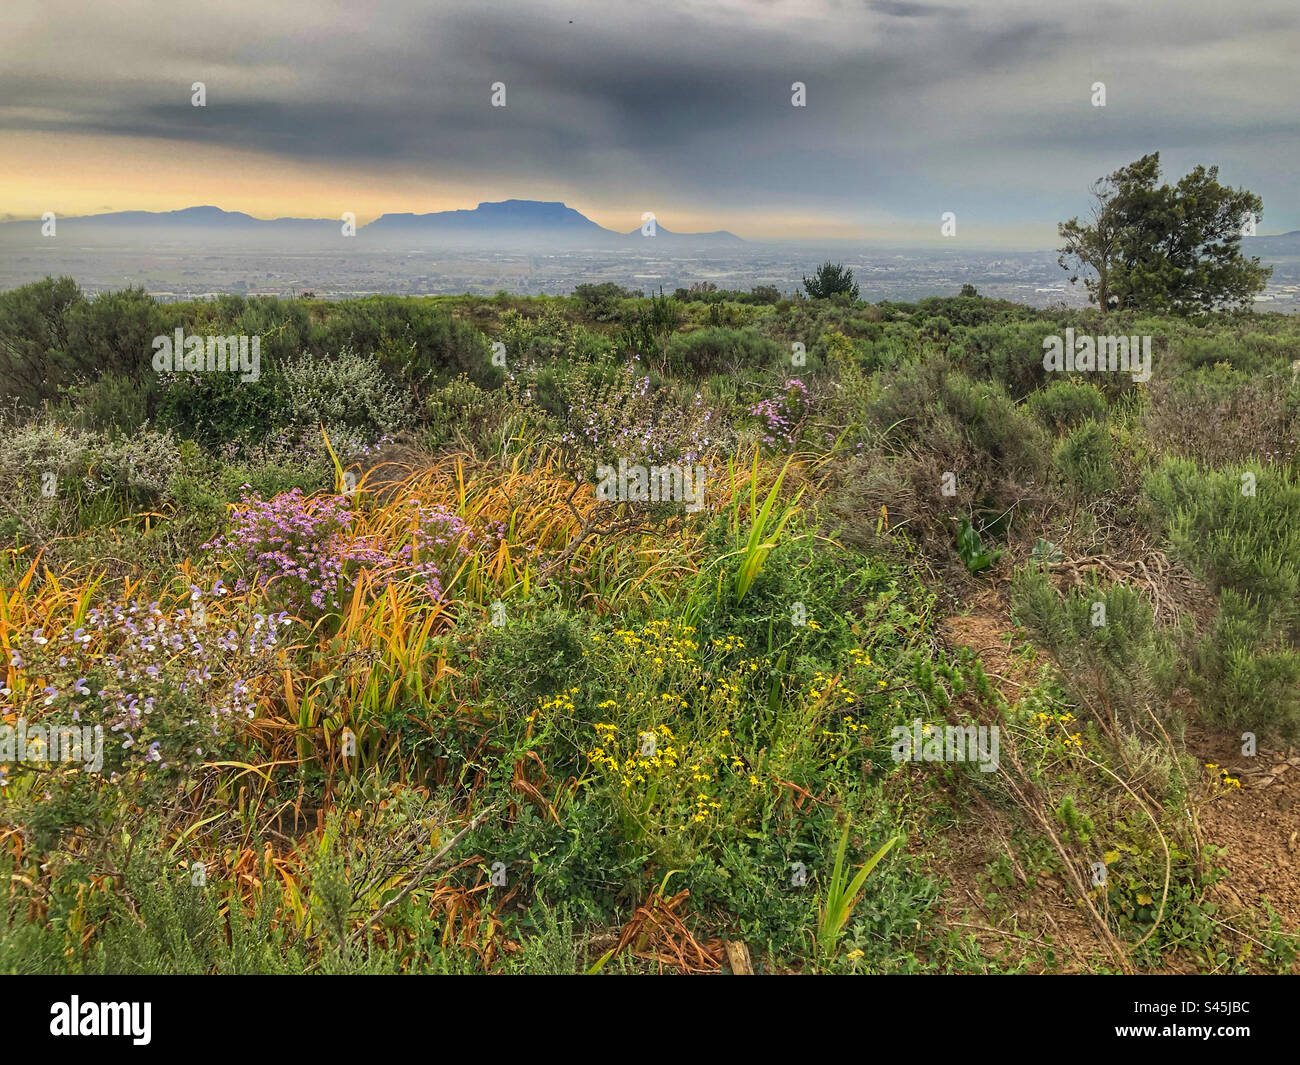 Fynbos-Vegetation vor dem Hintergrund des Tafelbergs, Kapstadt, Südafrika Stockfoto